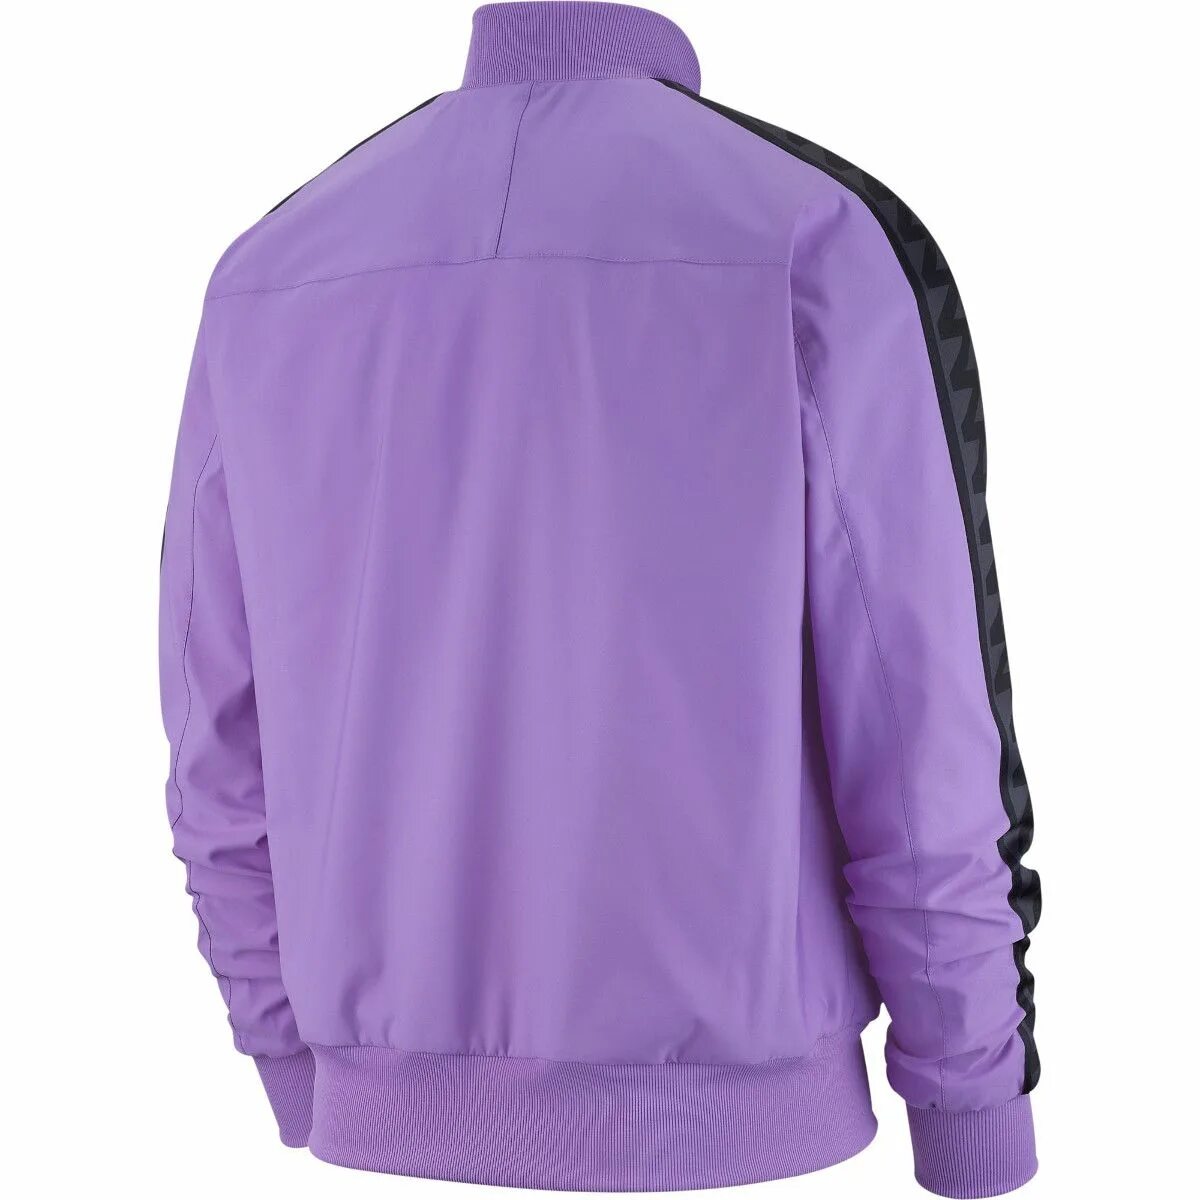 Мужская фиолетовая куртка. Nike куртка Court Rafa. Nike Jacket Training фиолетовая. Куртка Nike Purple. Фиолетовая куртка найк лост.